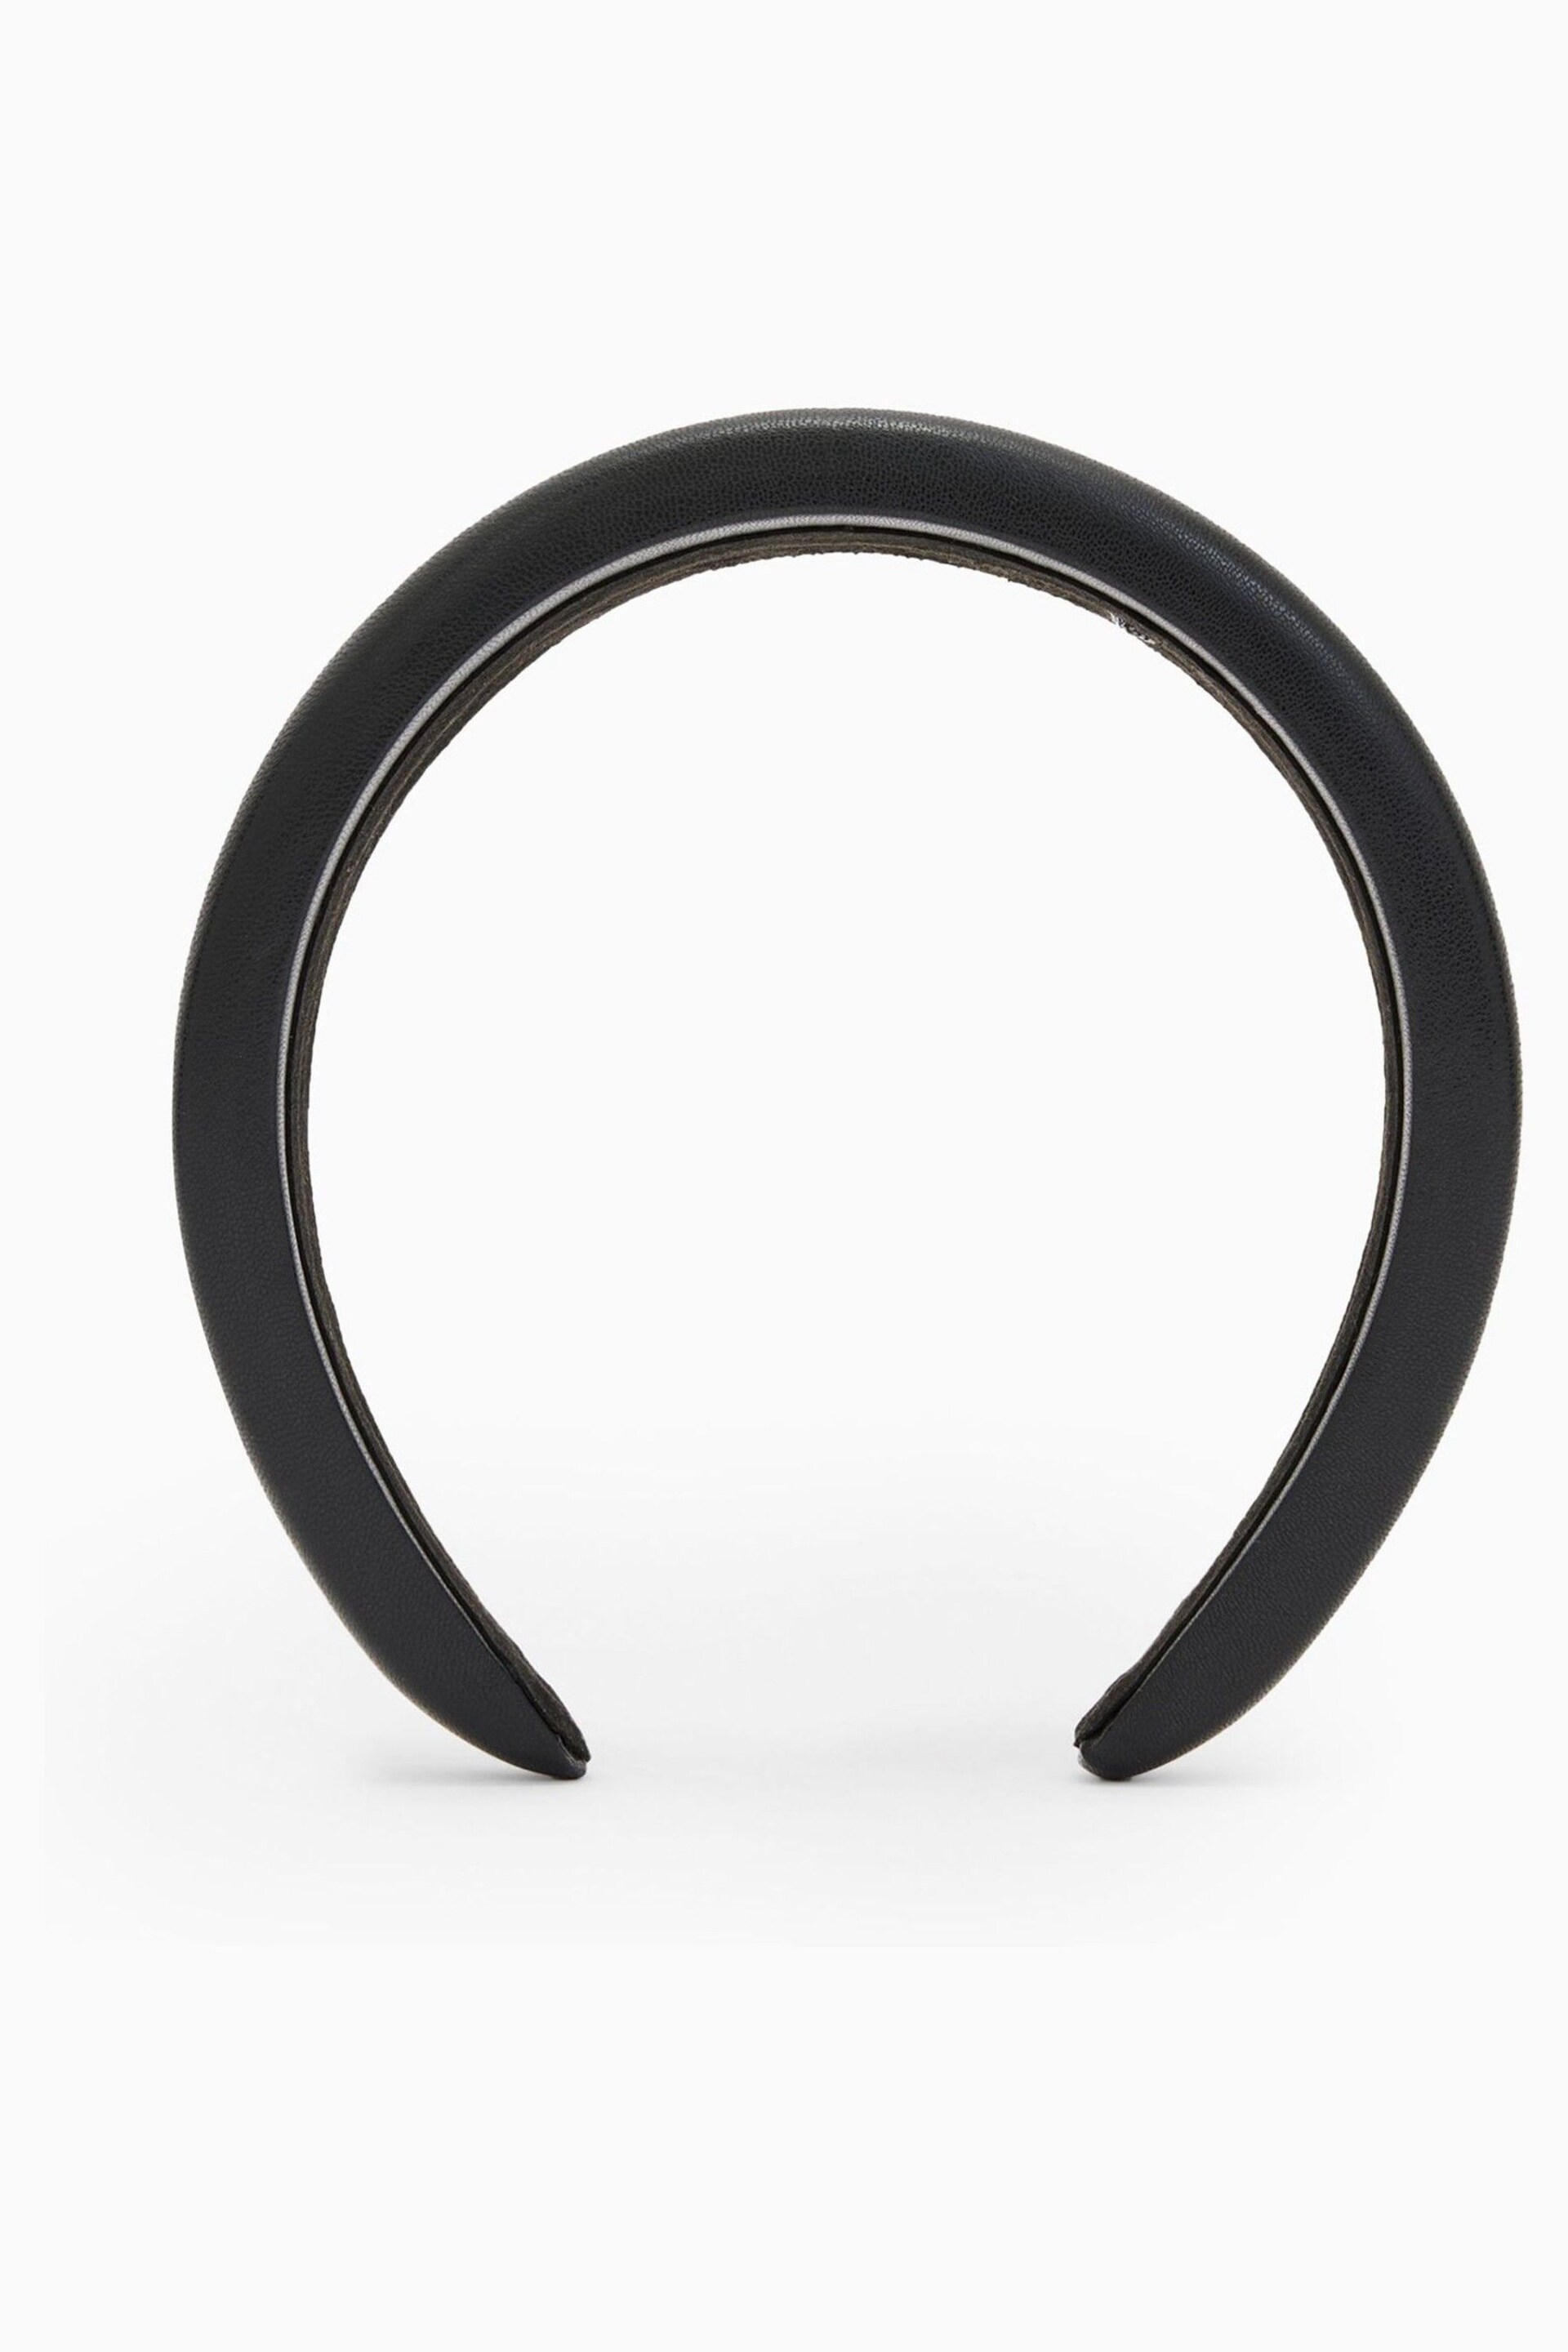 AllSaints Black Lea Headband - Image 2 of 3